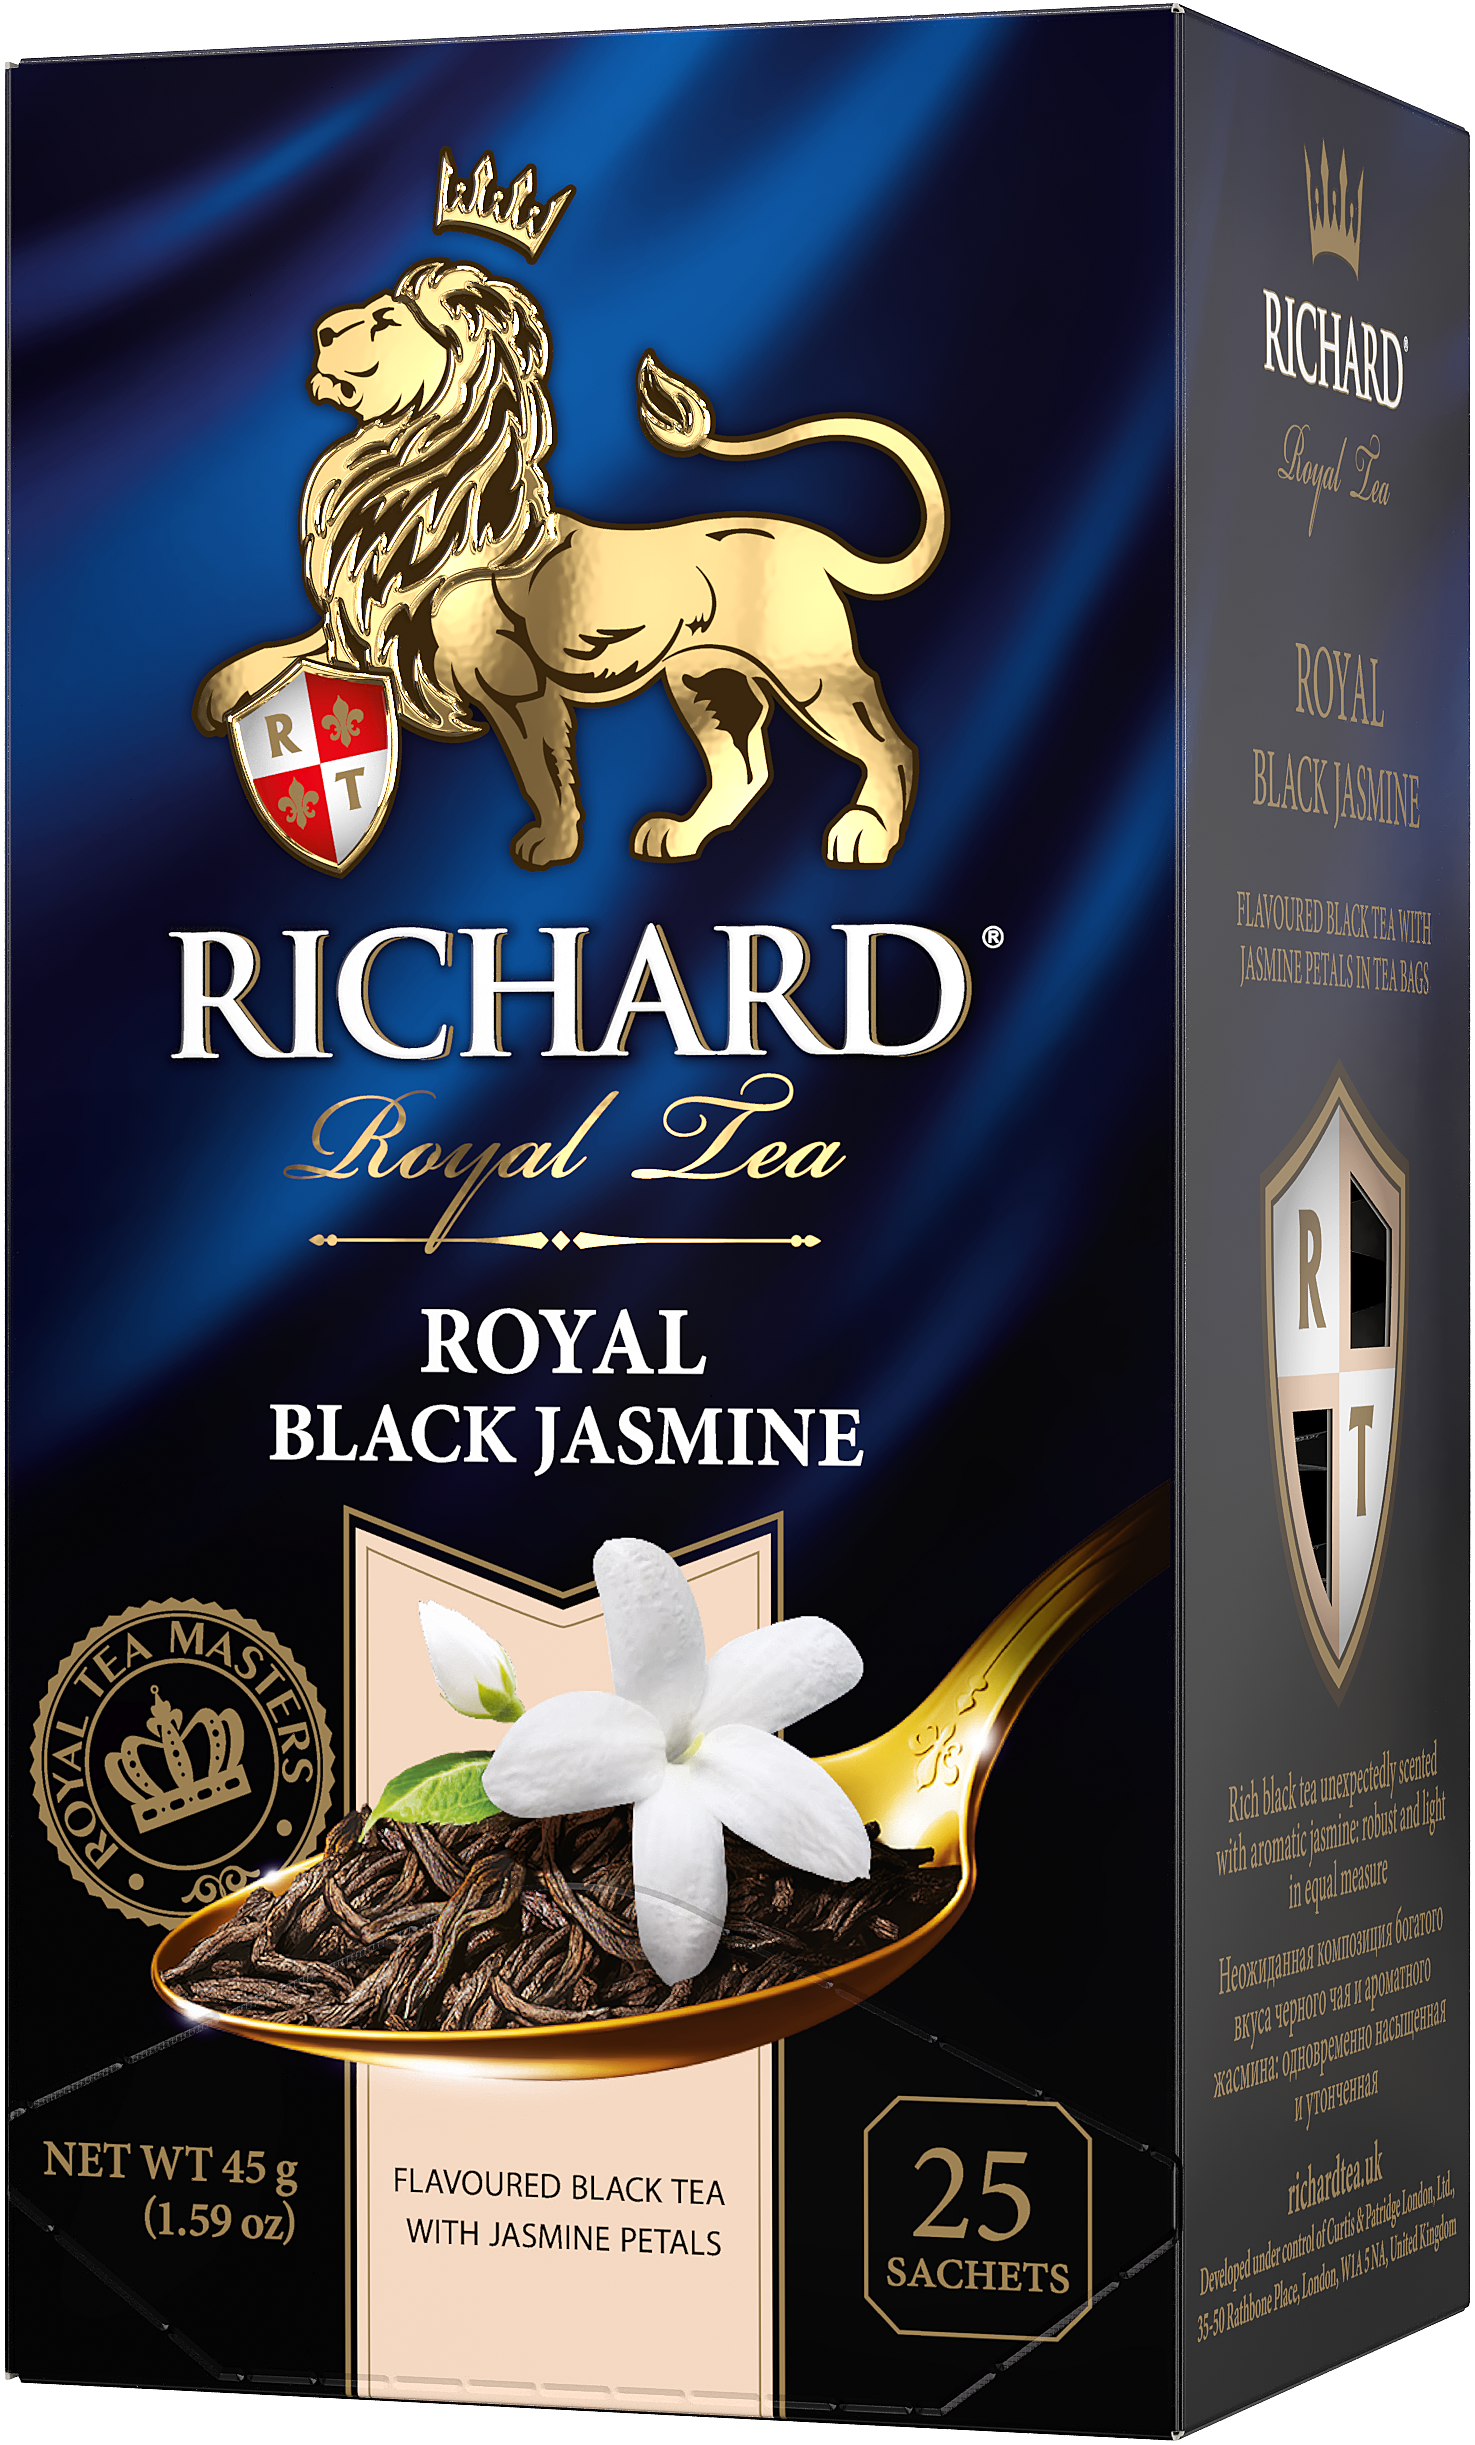 Richard "Royal Black Jasmine" black tea flavored, 25 sachet, 45 g